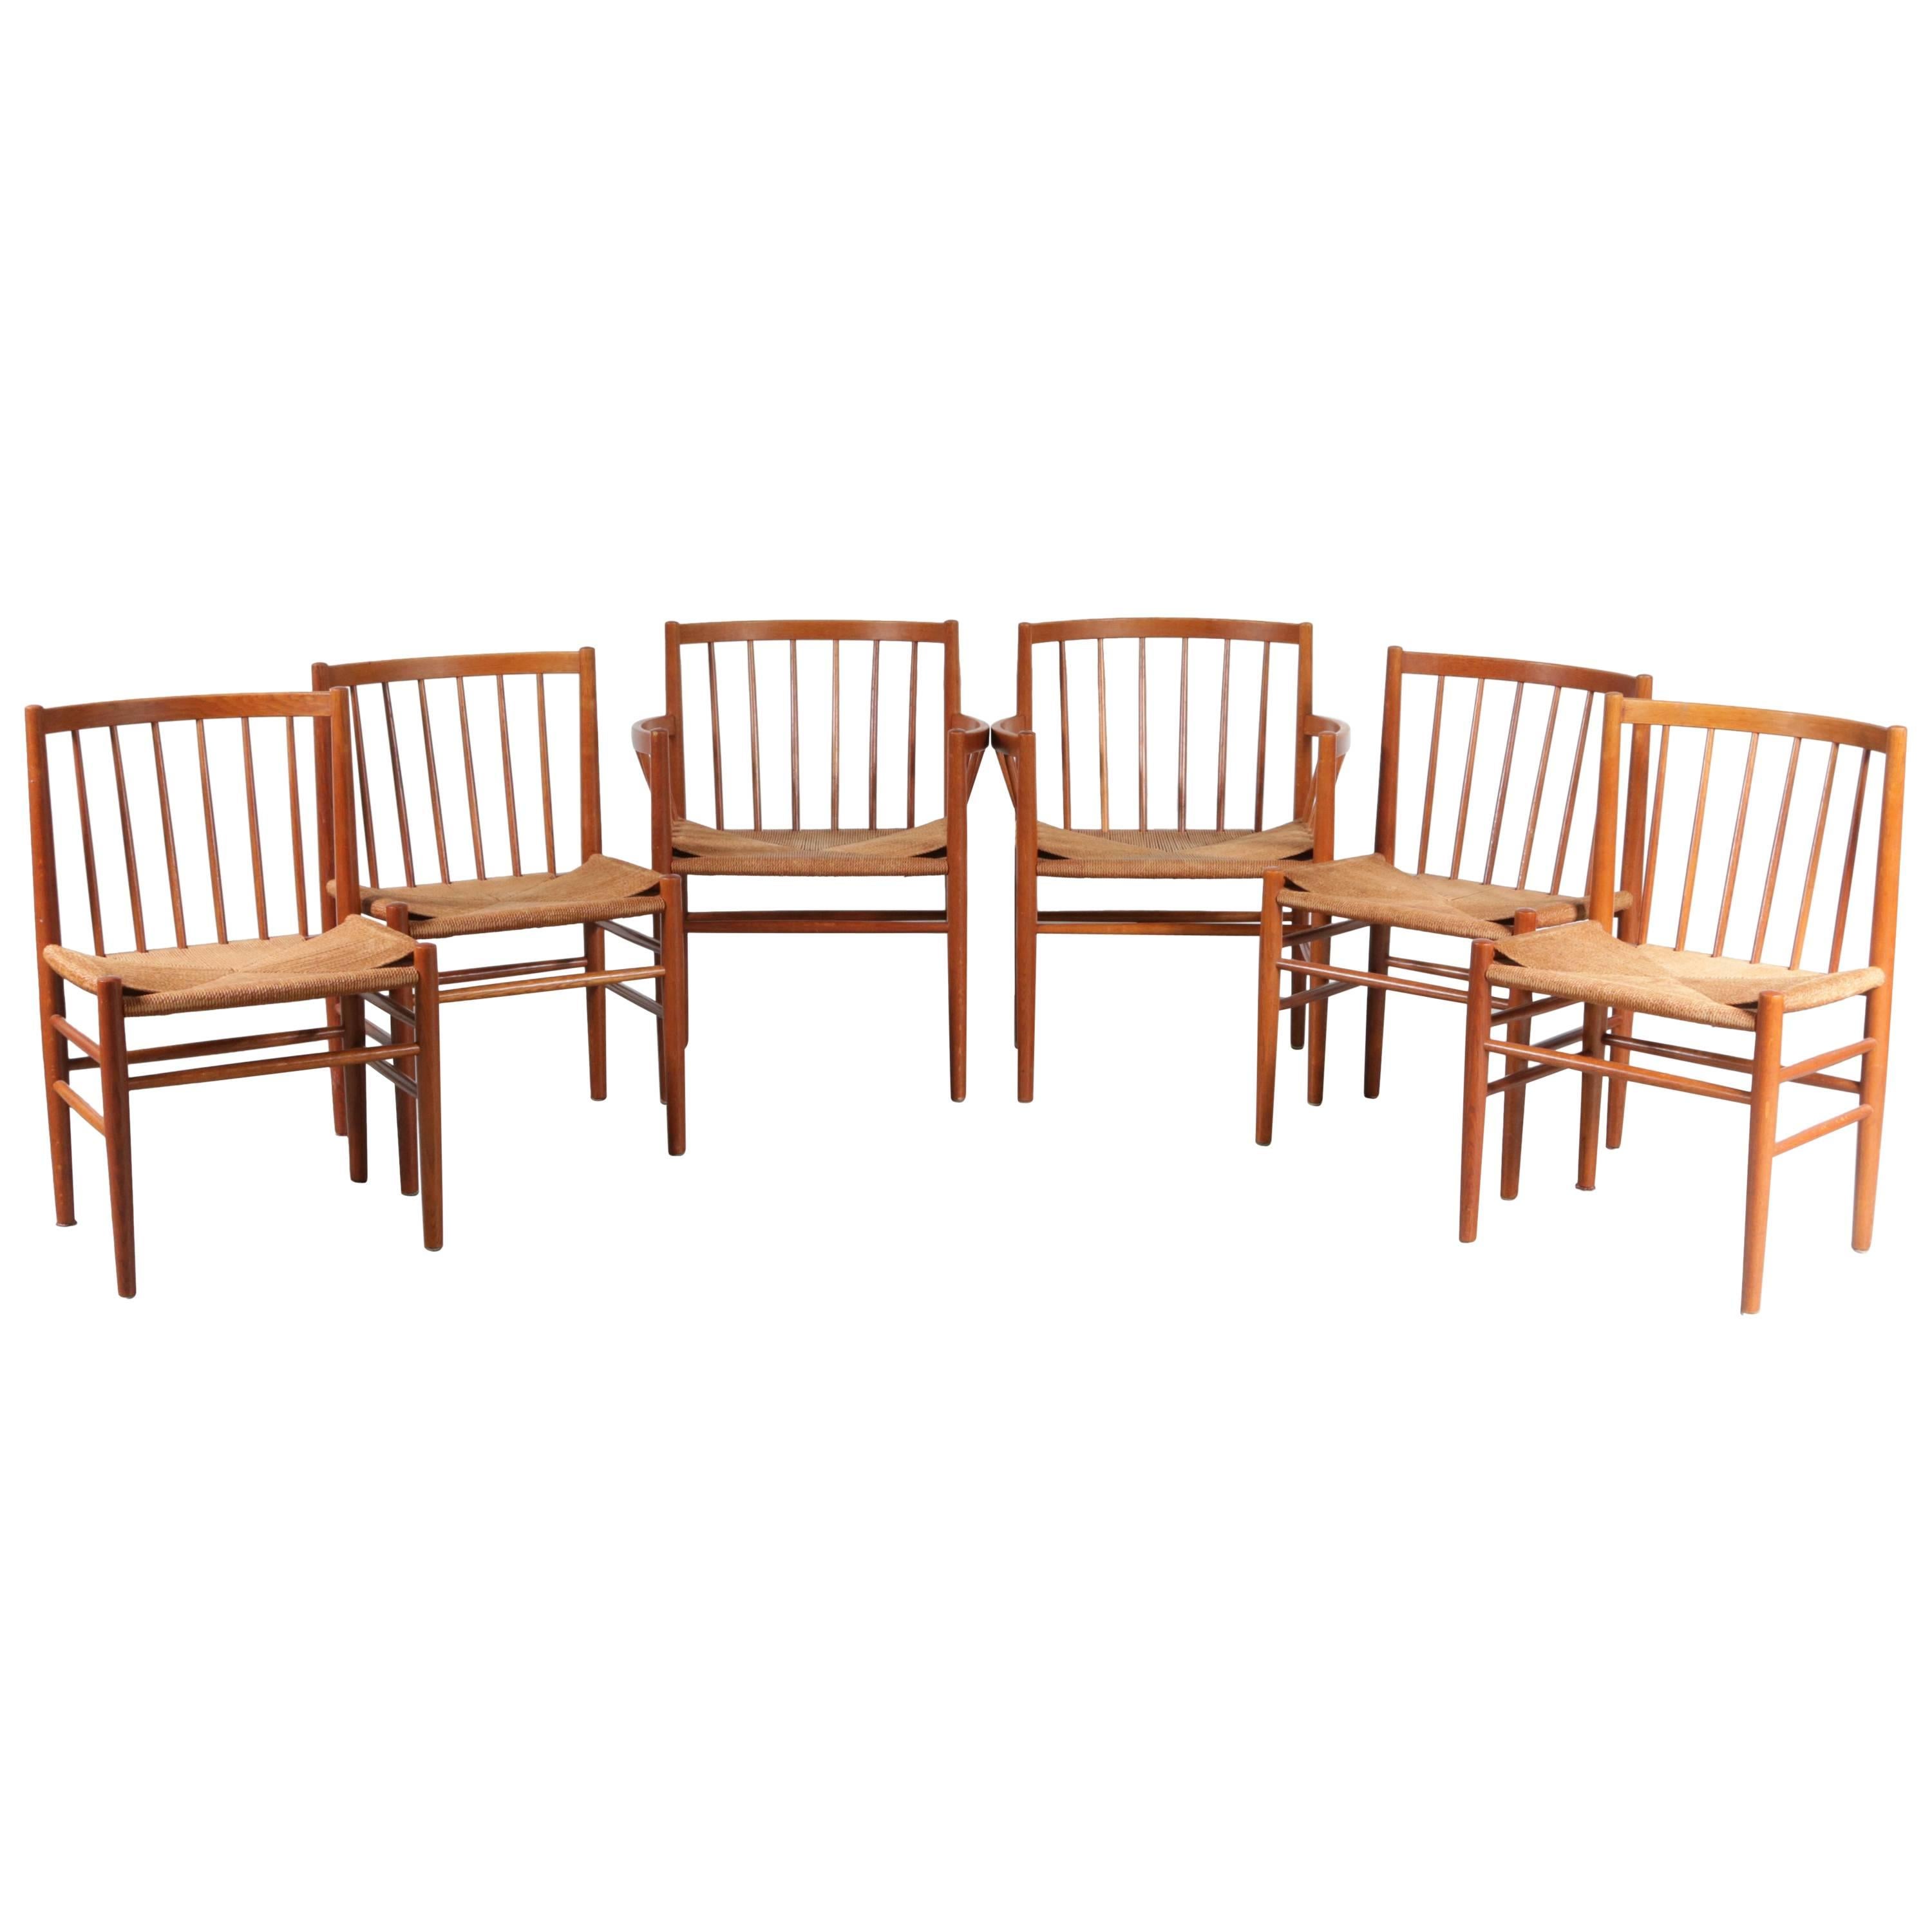 Set of Six Dining Chairs by Jørgen Bækmark for FDM Møbler in Denmark, 1950s